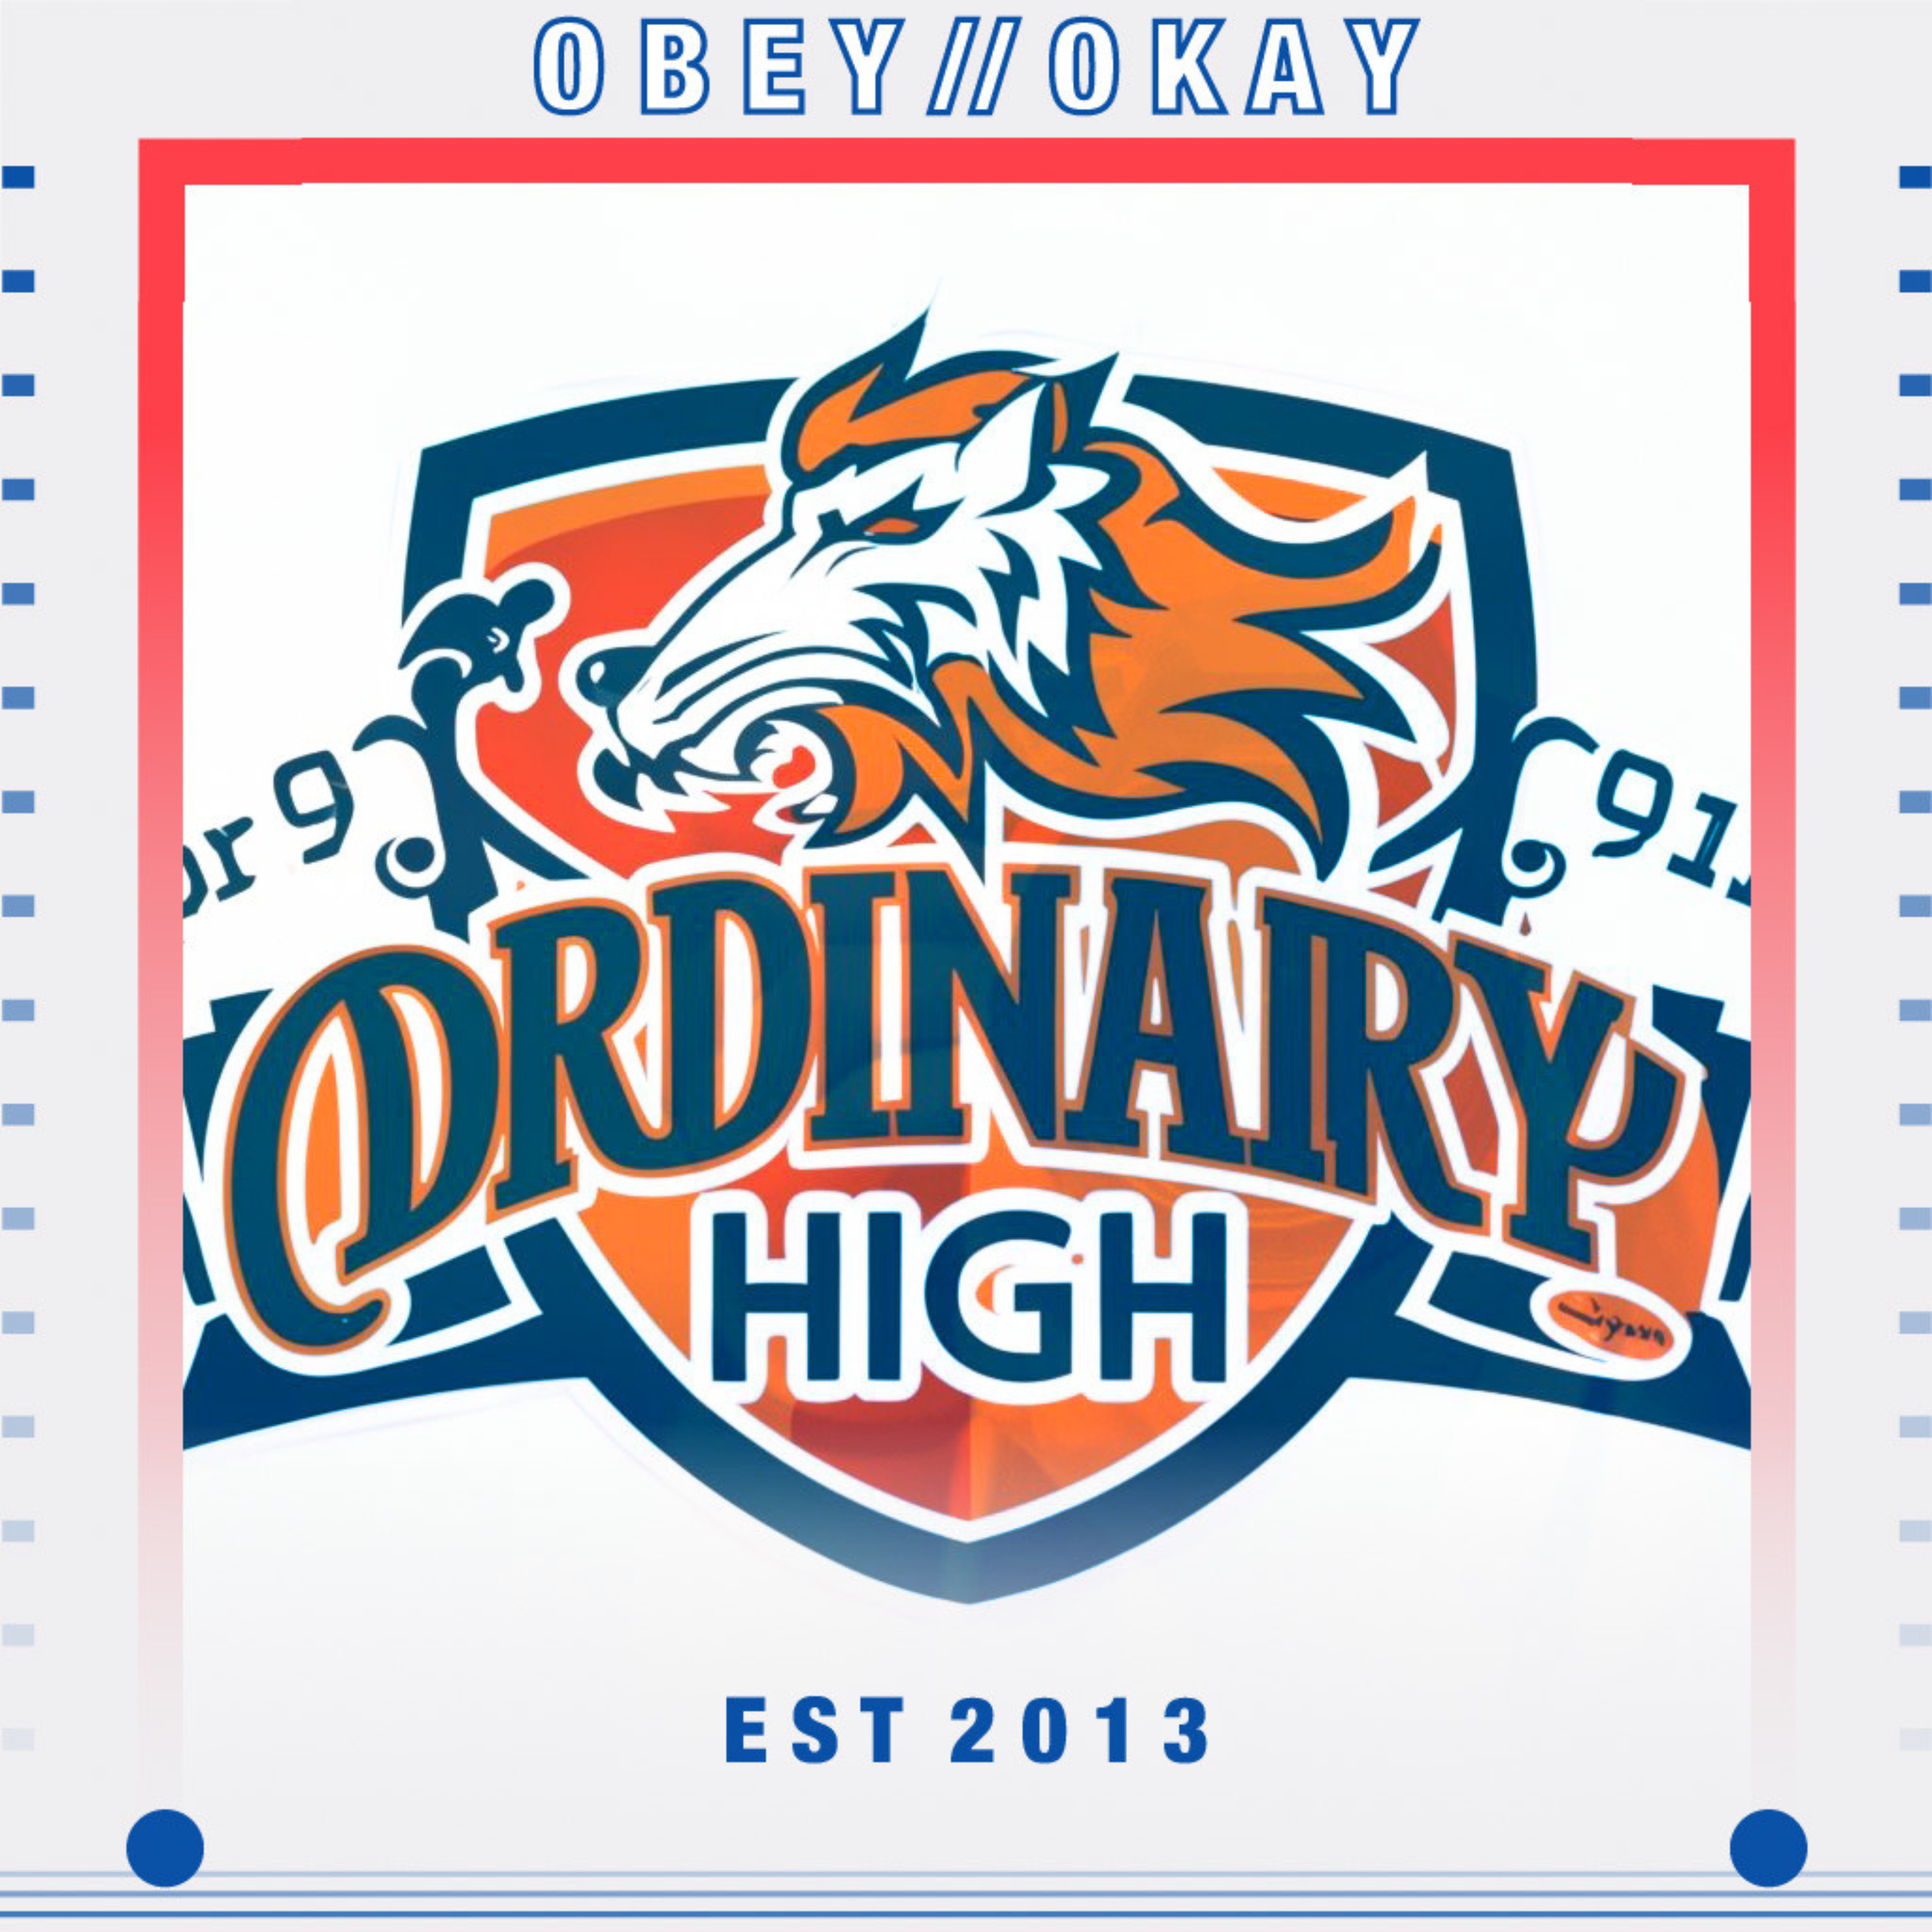 OBEY OKAY - ordinary high